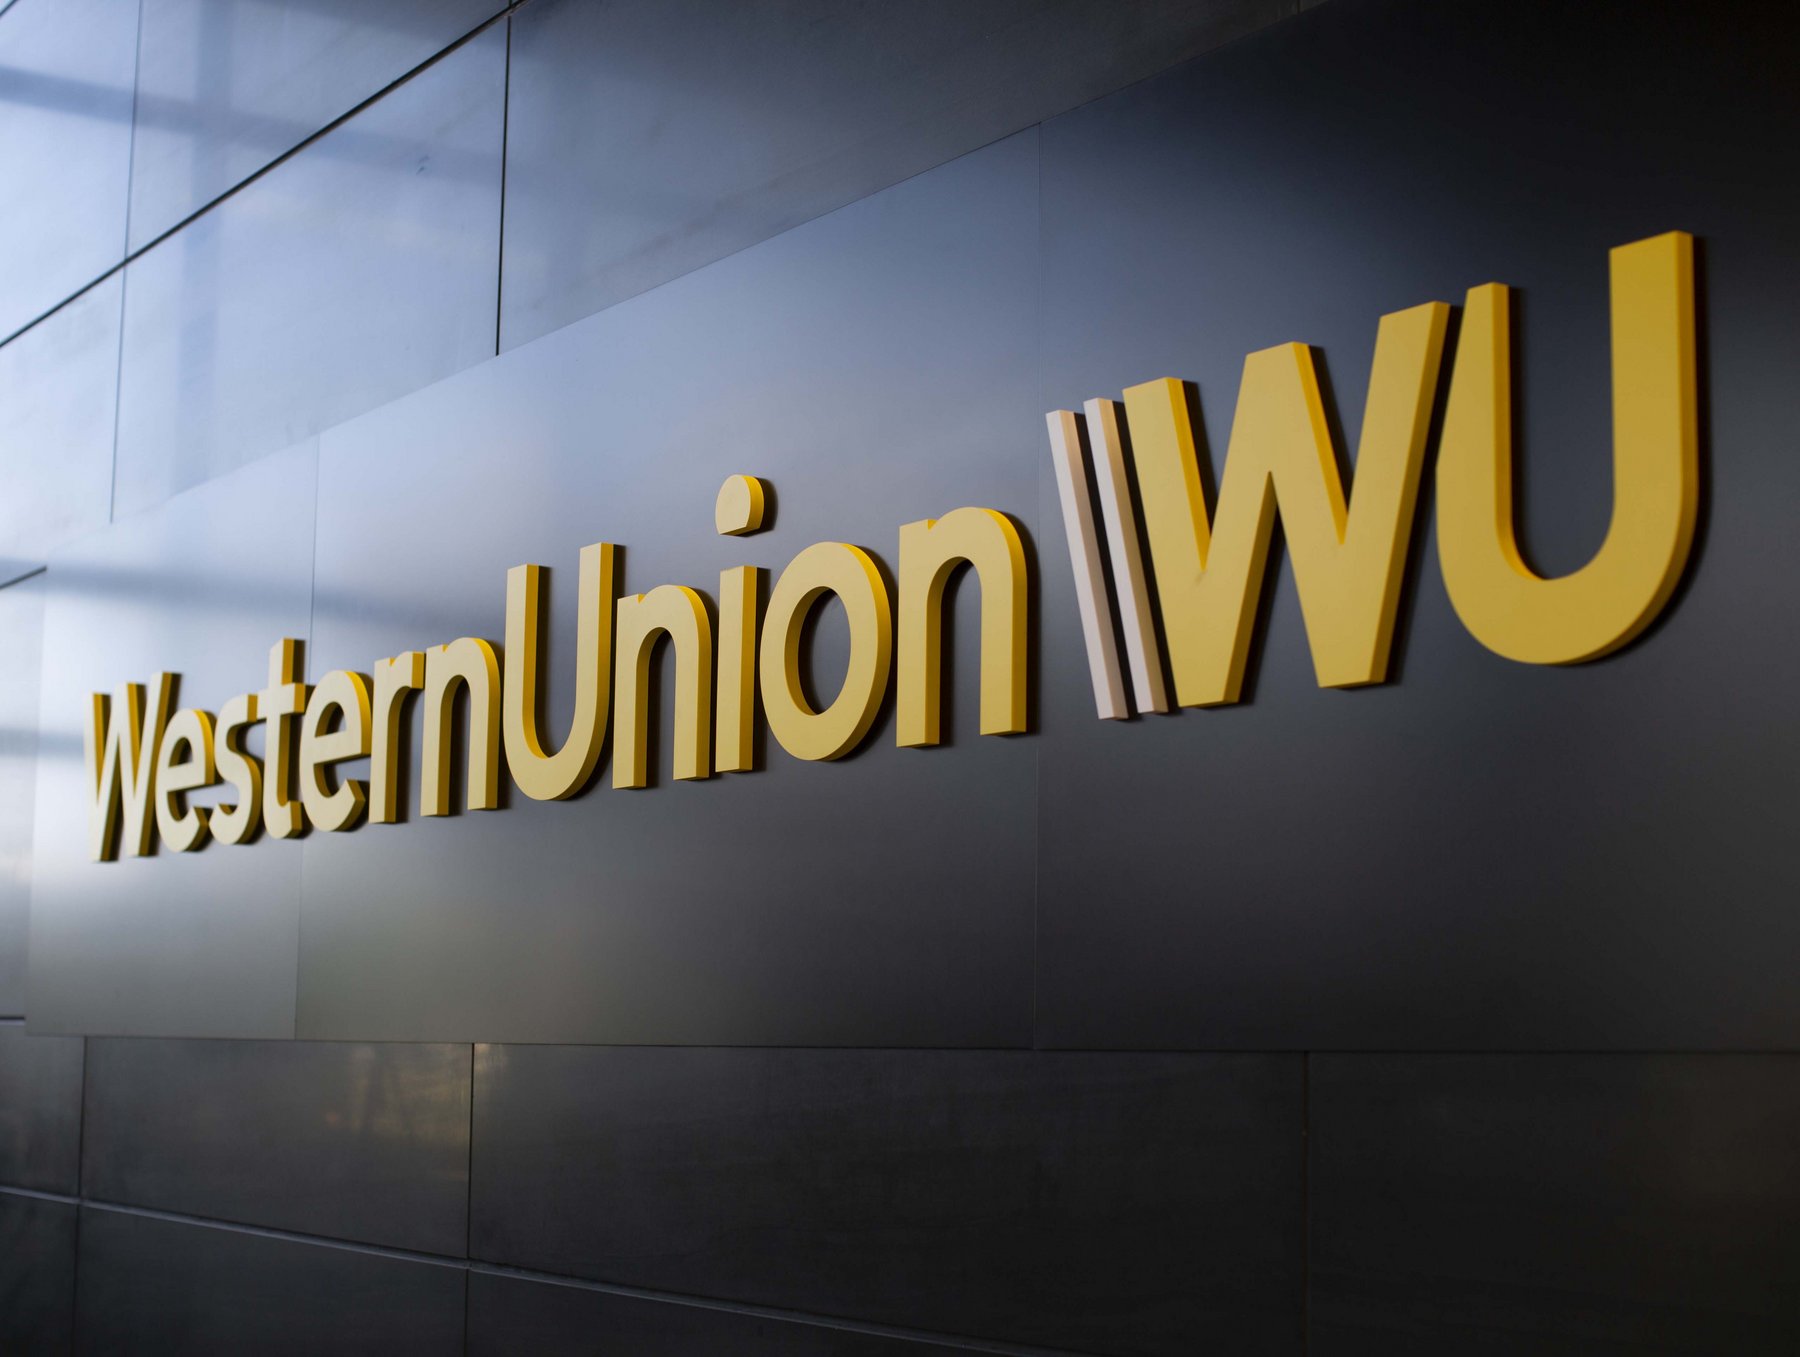 Western Union — Nuvei